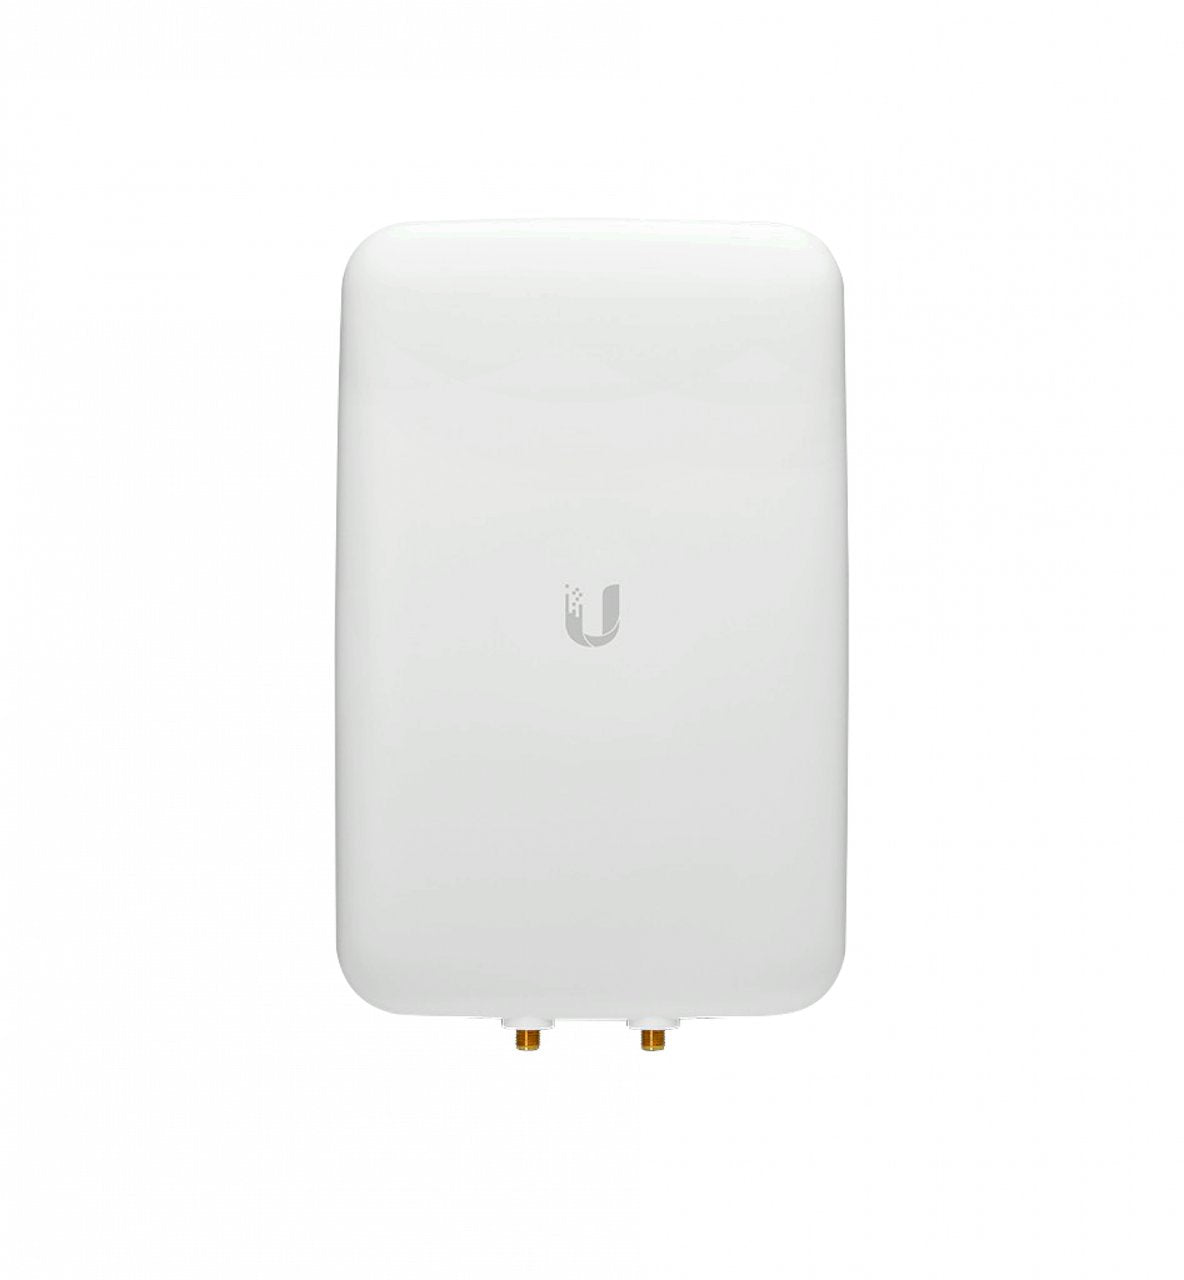 Ubiquiti UniFi UMA-D Directional Dual-Band Antenna for UAP-AC-M